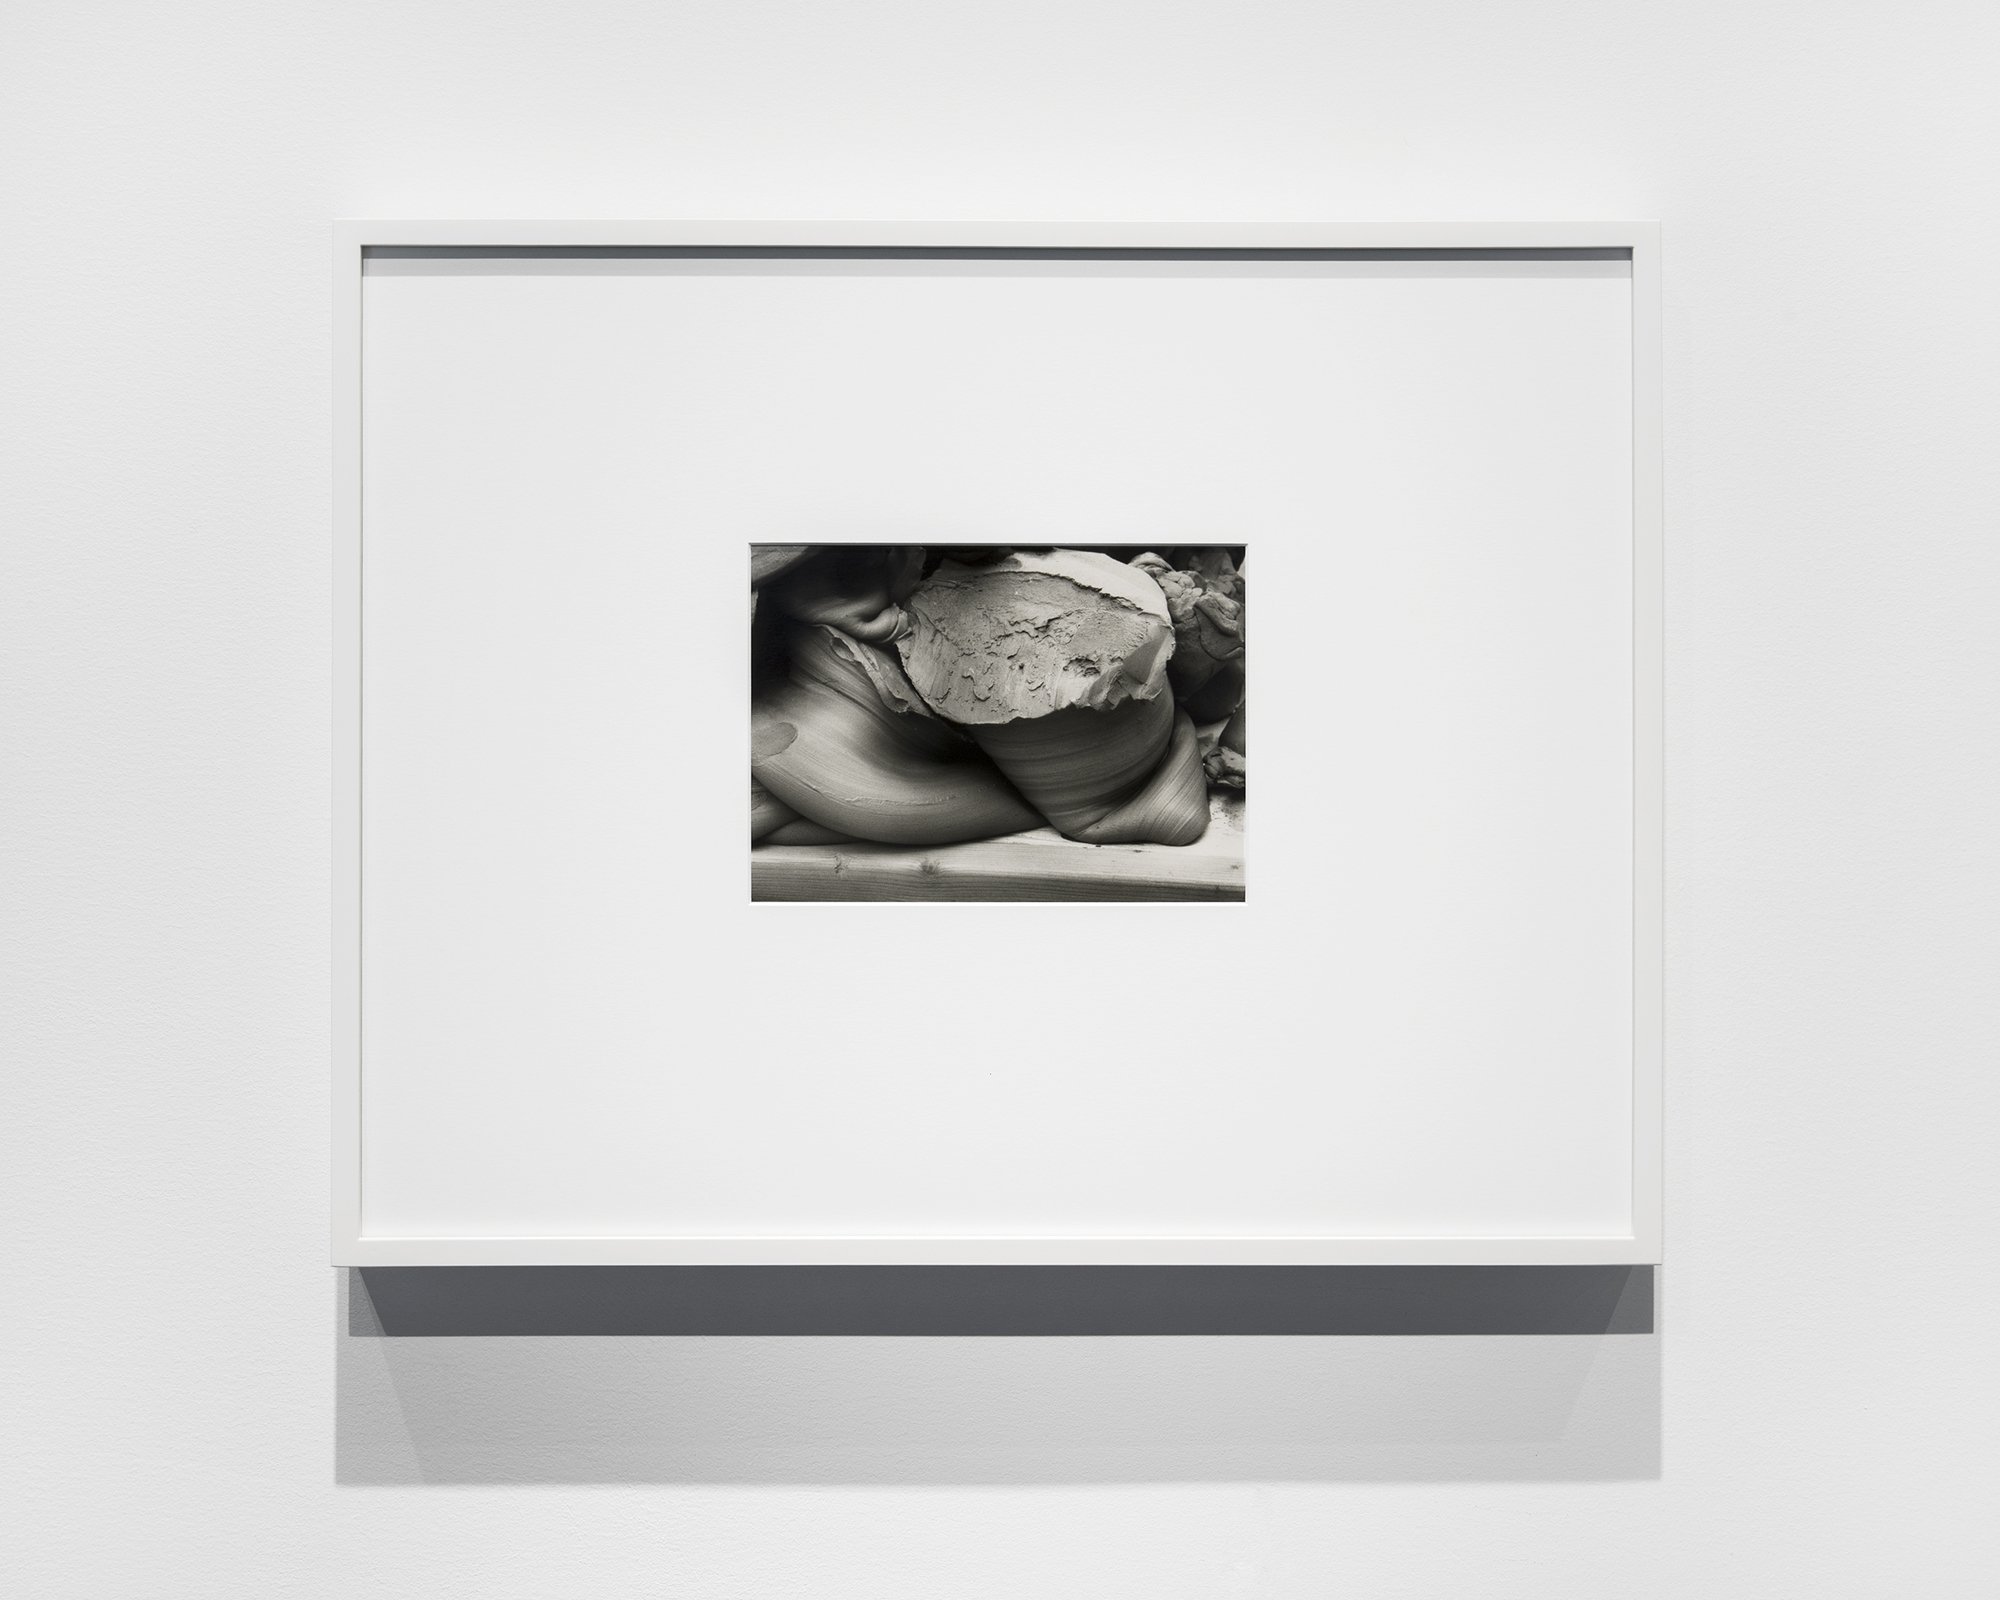  Untitled (Clay Portfolio) (2013) gelatin silver print, 7 3/4′′ x 5 3/4′′, from a portfolio of 21 images 